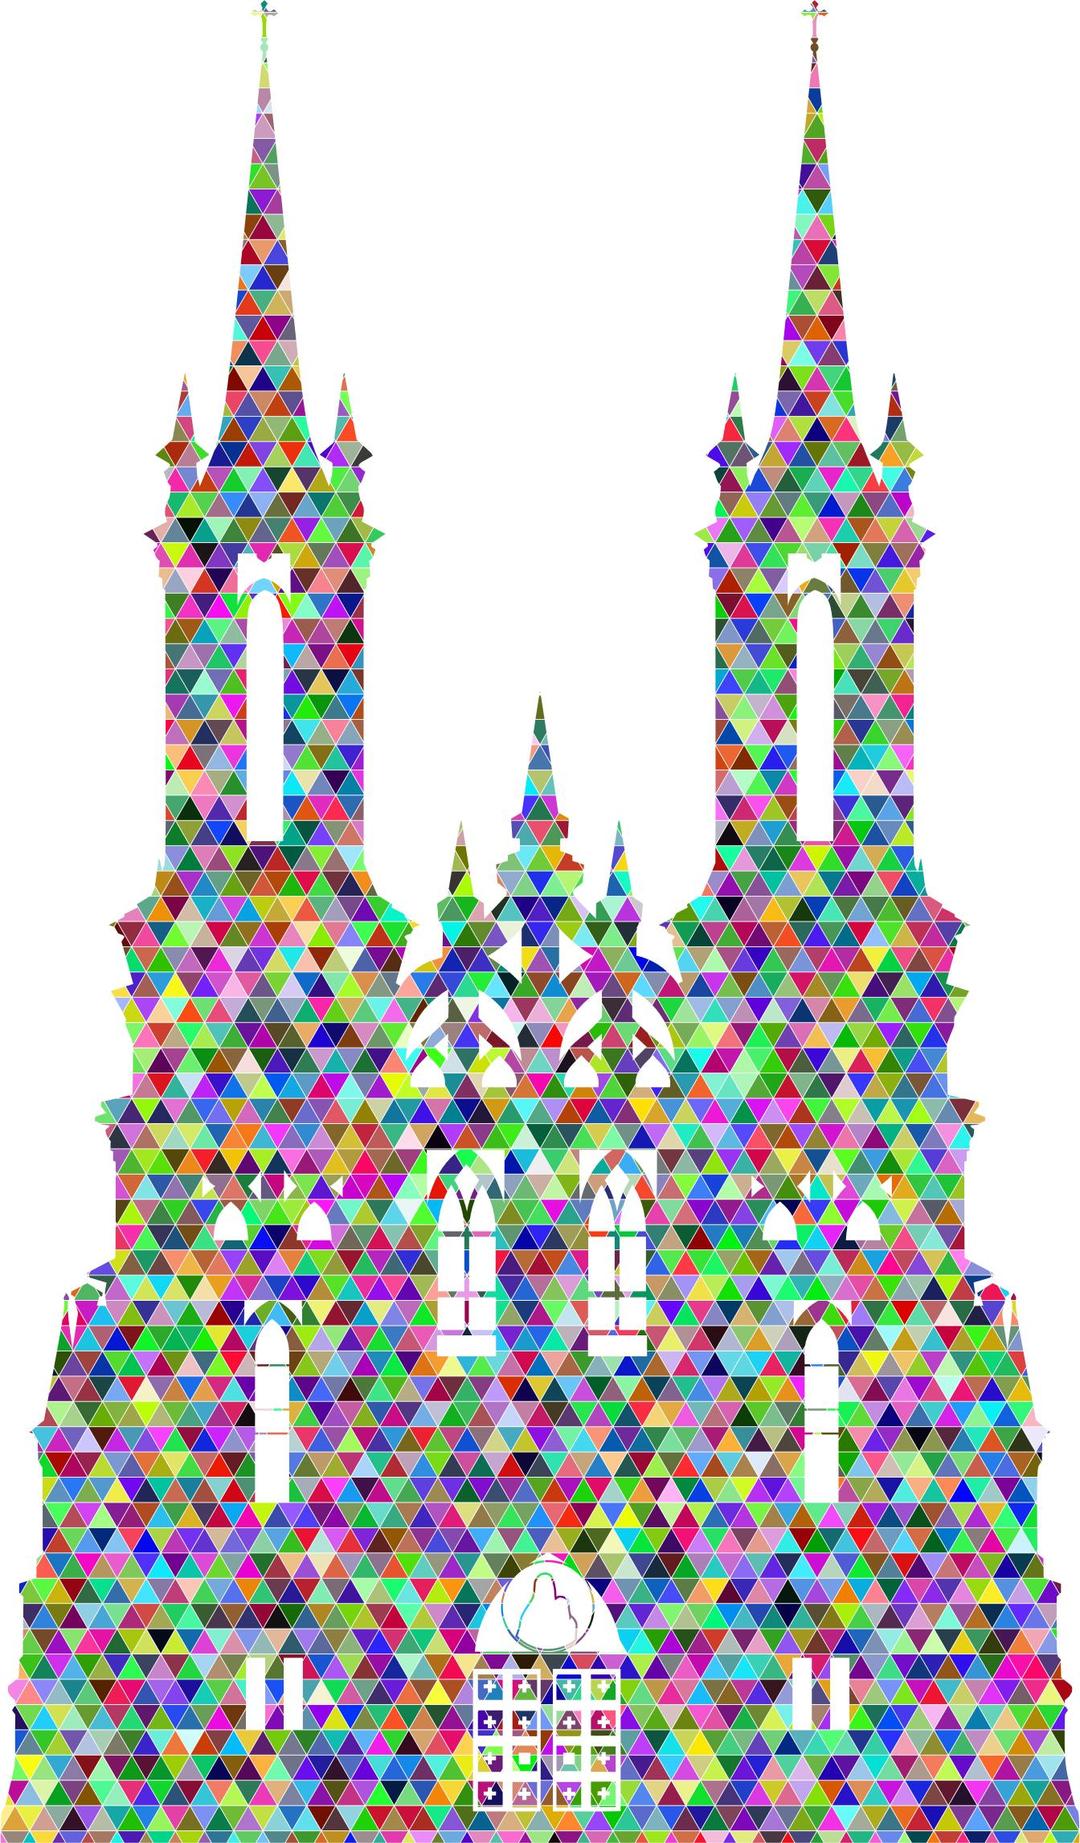 Prismatic Triangular Mosaic Gothic Castle png transparent